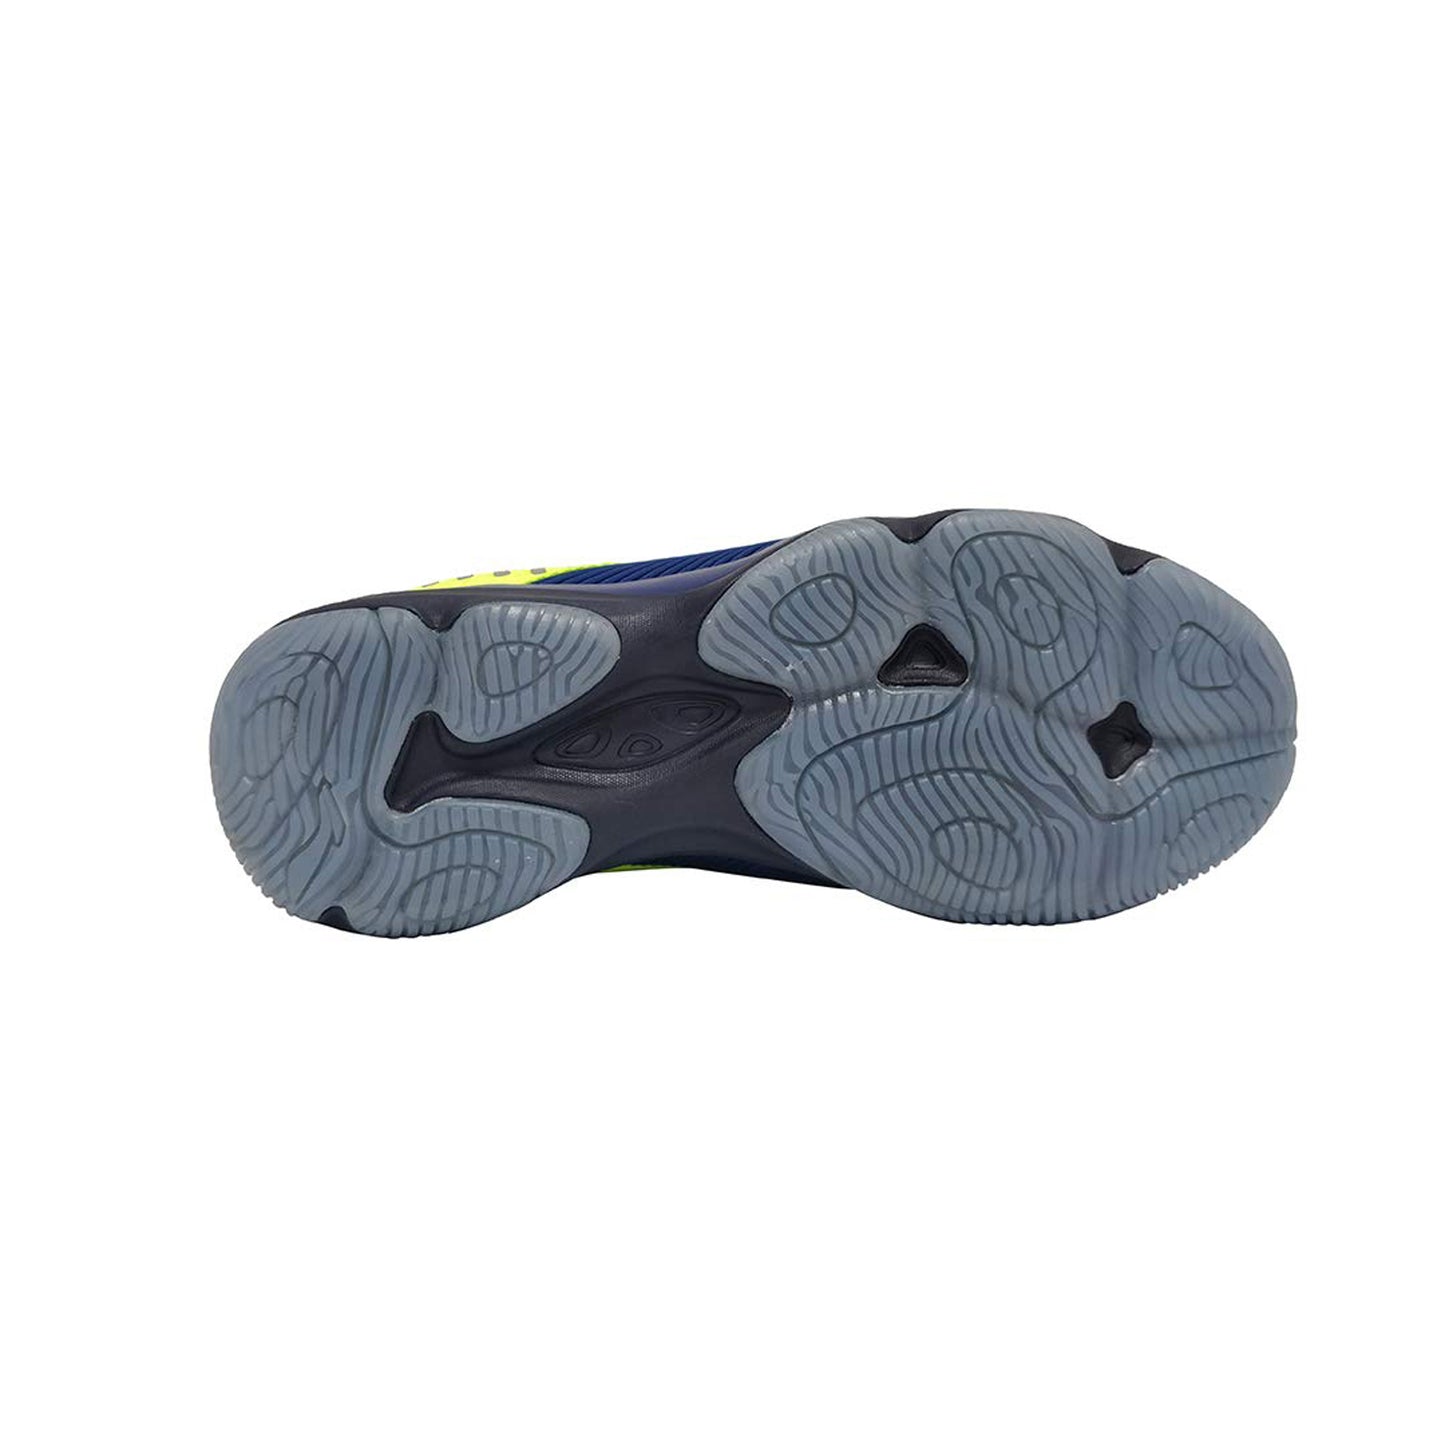 Li-Ning Ranger TD Non Marking Badminton Shoes, Navy Blue/Deep Blue-8.5 UK - Best Price online Prokicksports.com